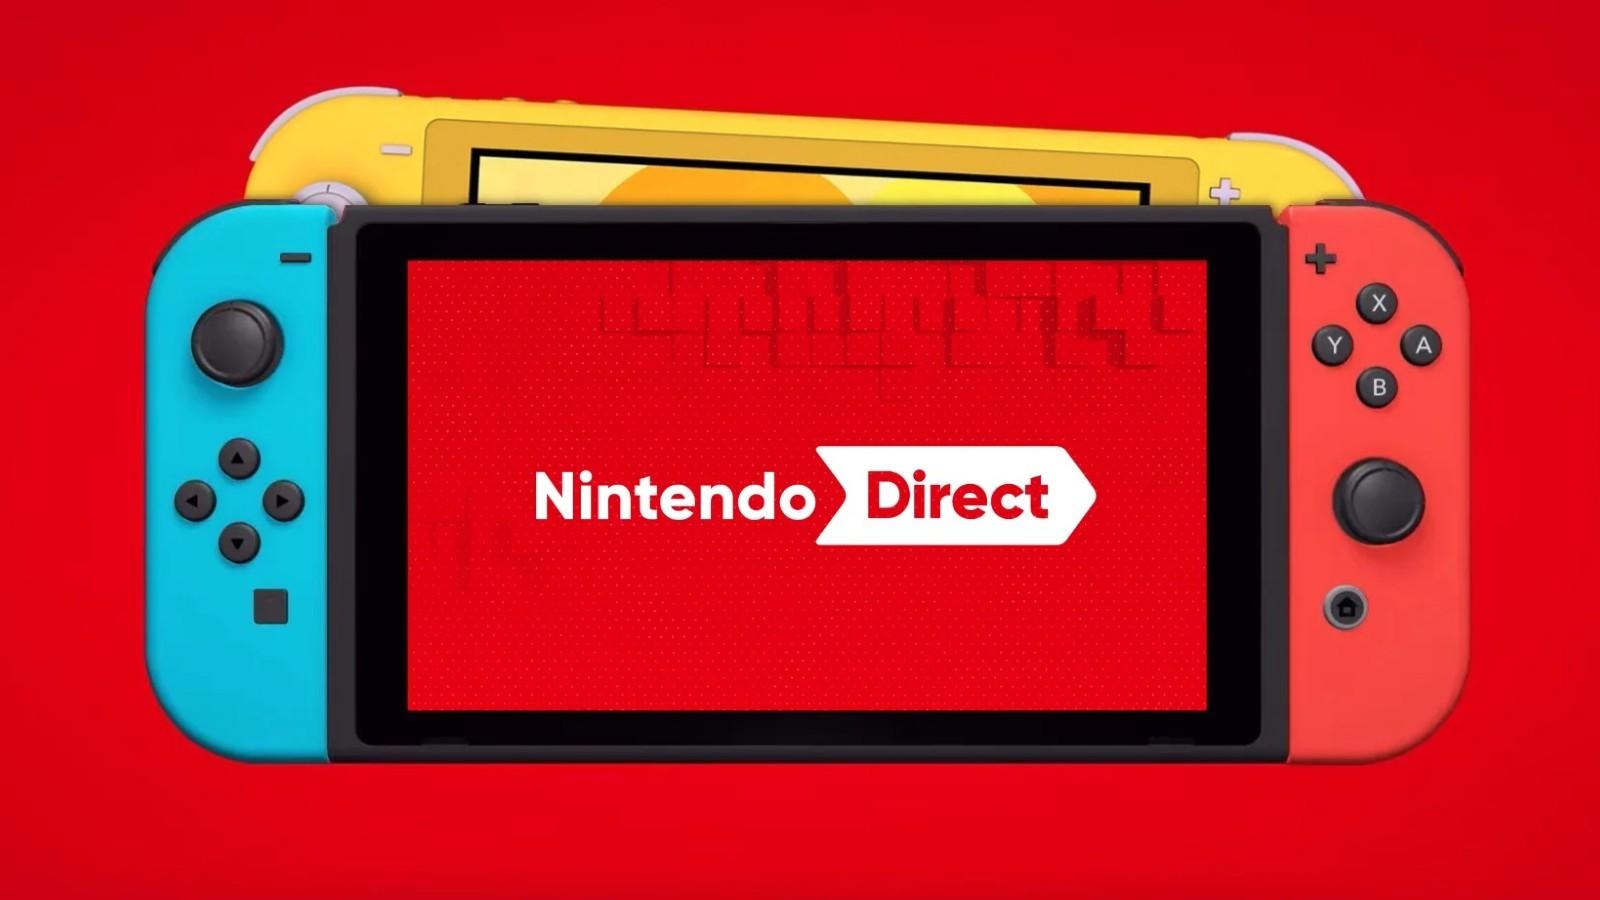 Nintendo Direct event